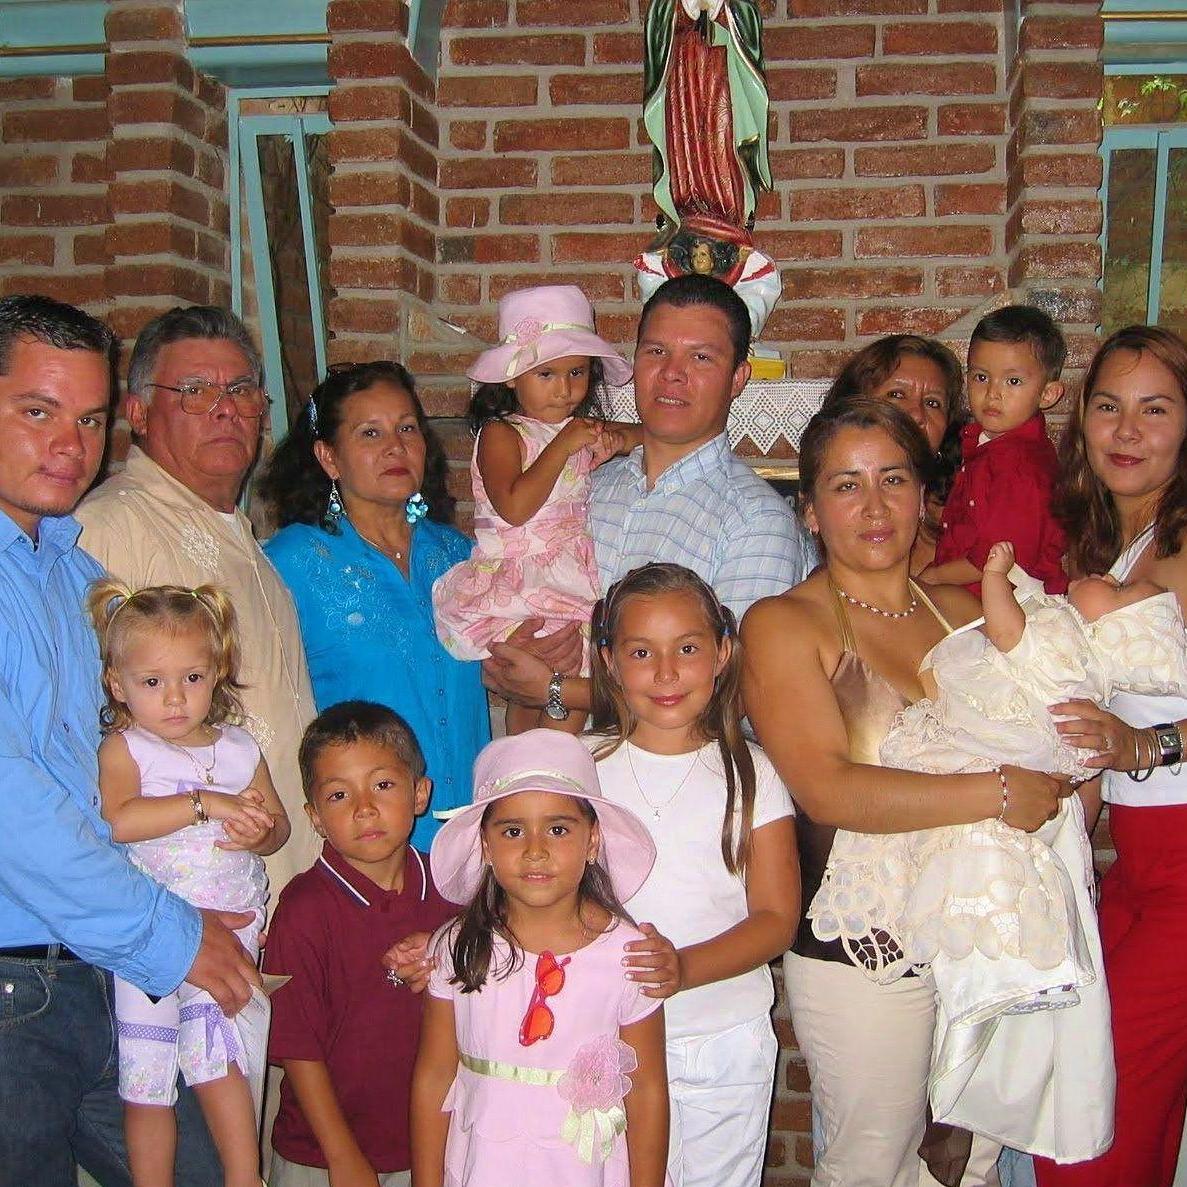 El bautizo de Camila
La Paz BCS, Mexico